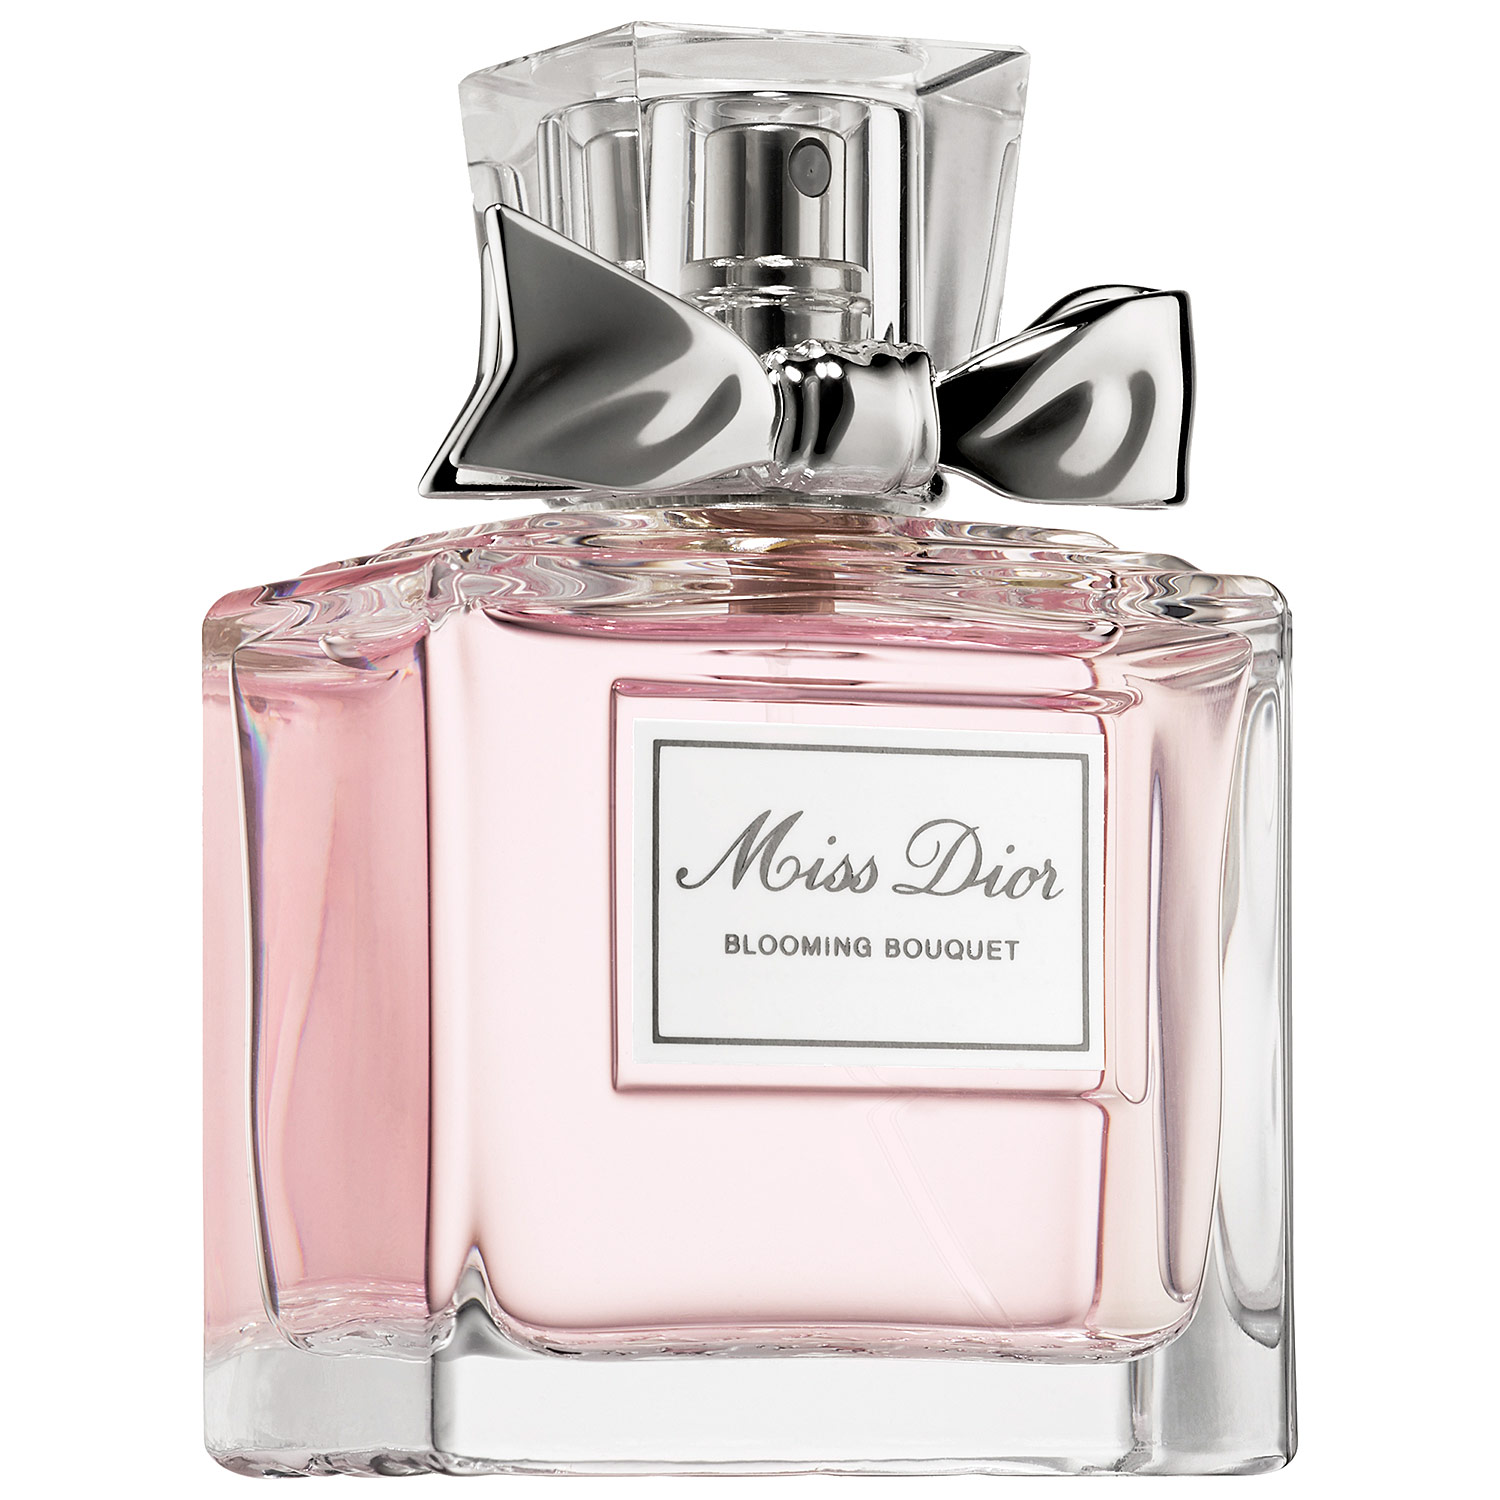 Miss Dior Blooming Bouquet, il profumo sensuale